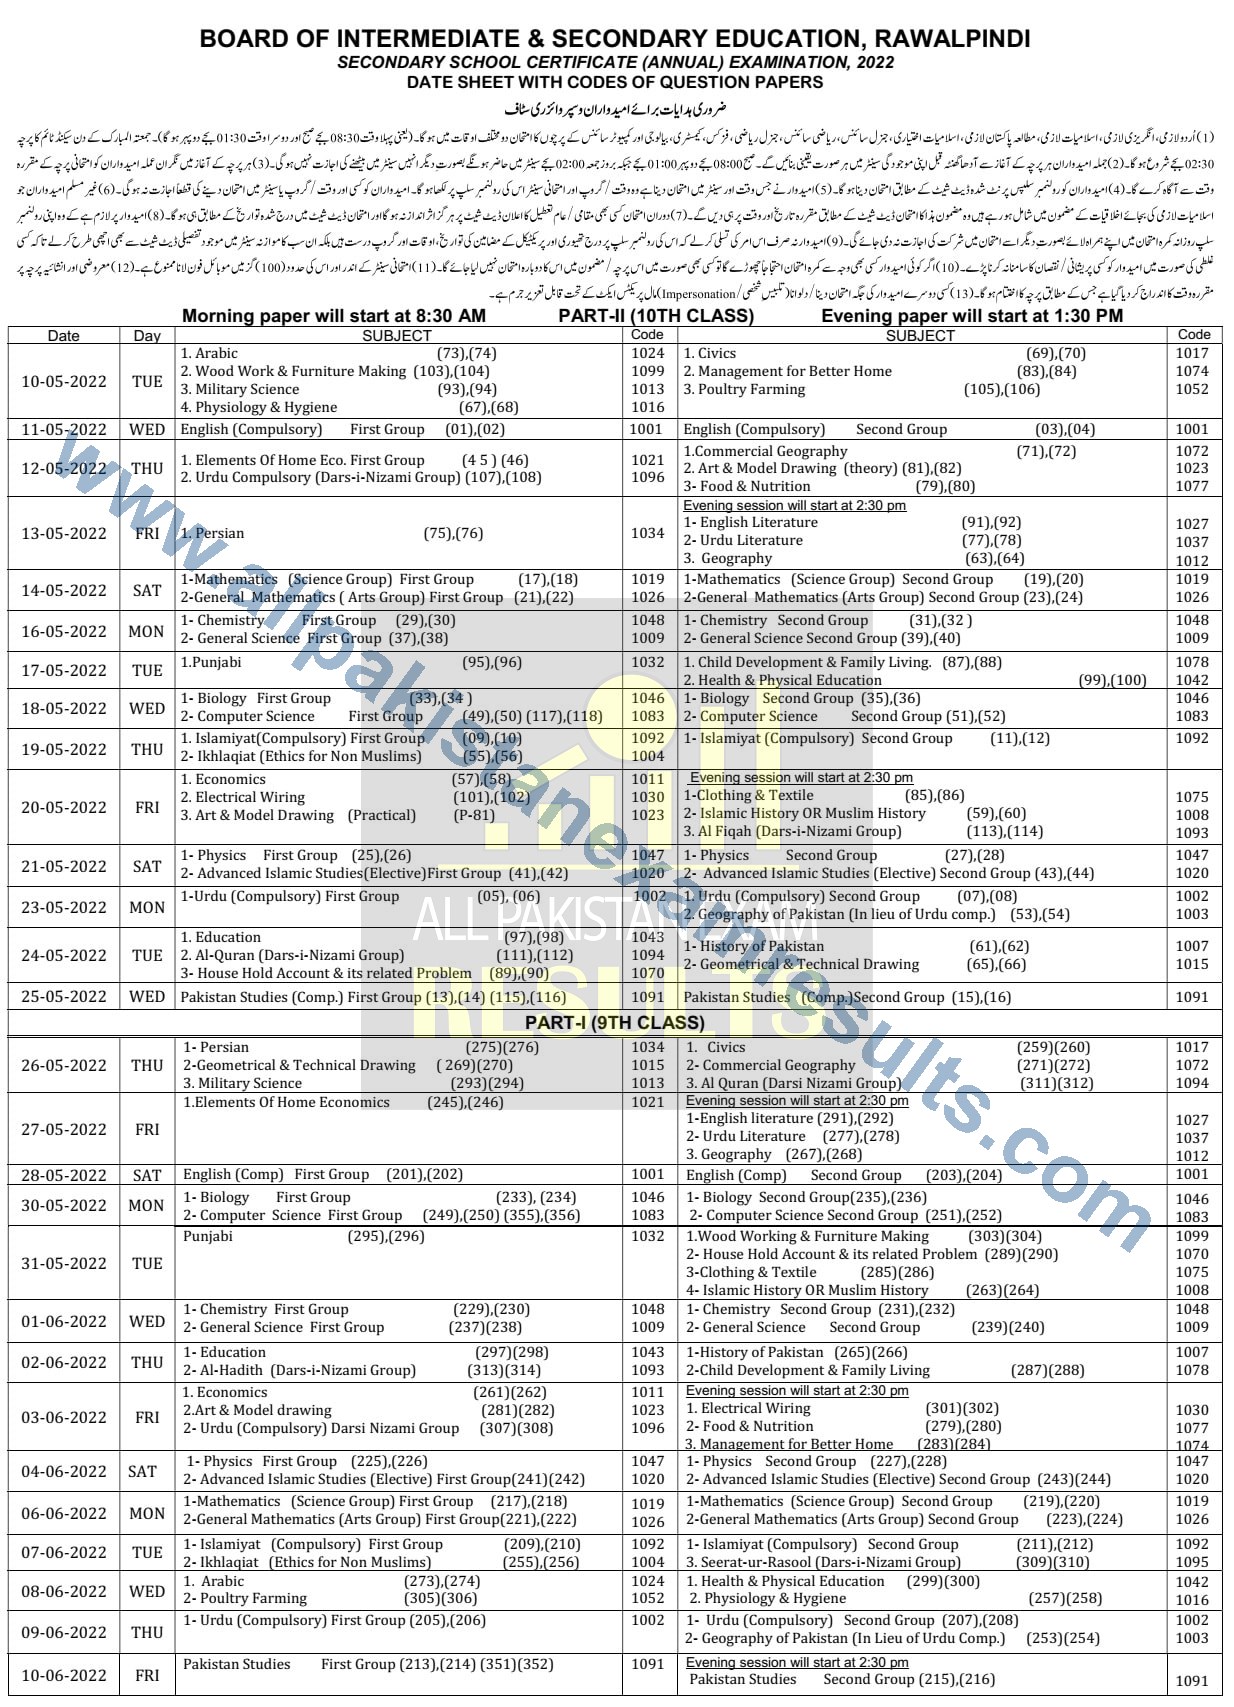 BISE Rawalpindi Date Sheet 9th & 10th Class 2022 Annual Exam